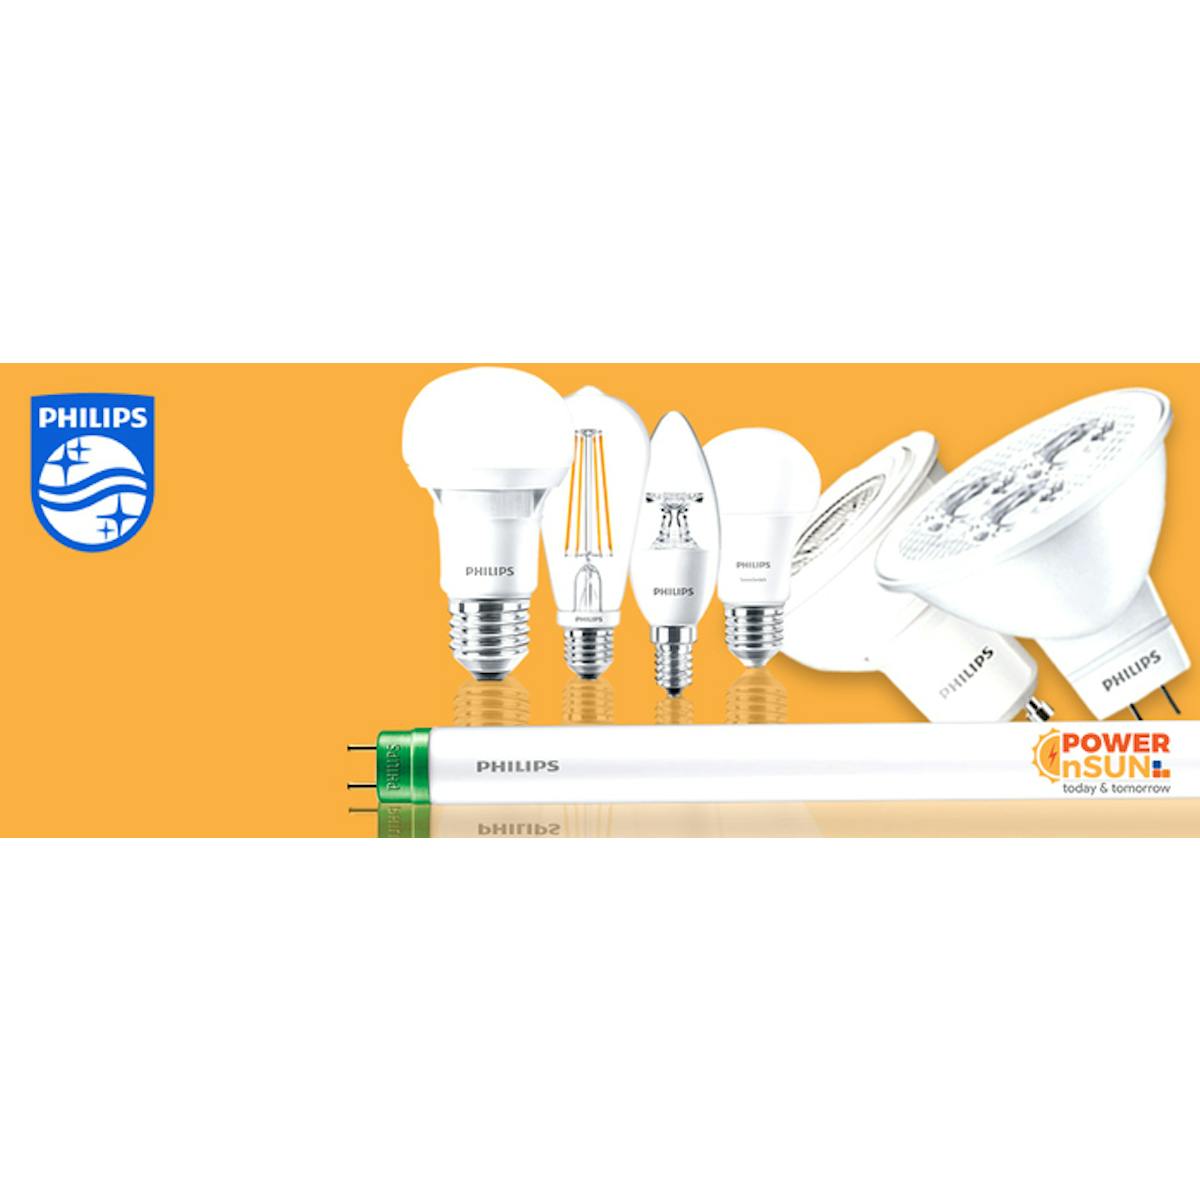 Philips LED Lights, Lamps, Bulbs and Tubes